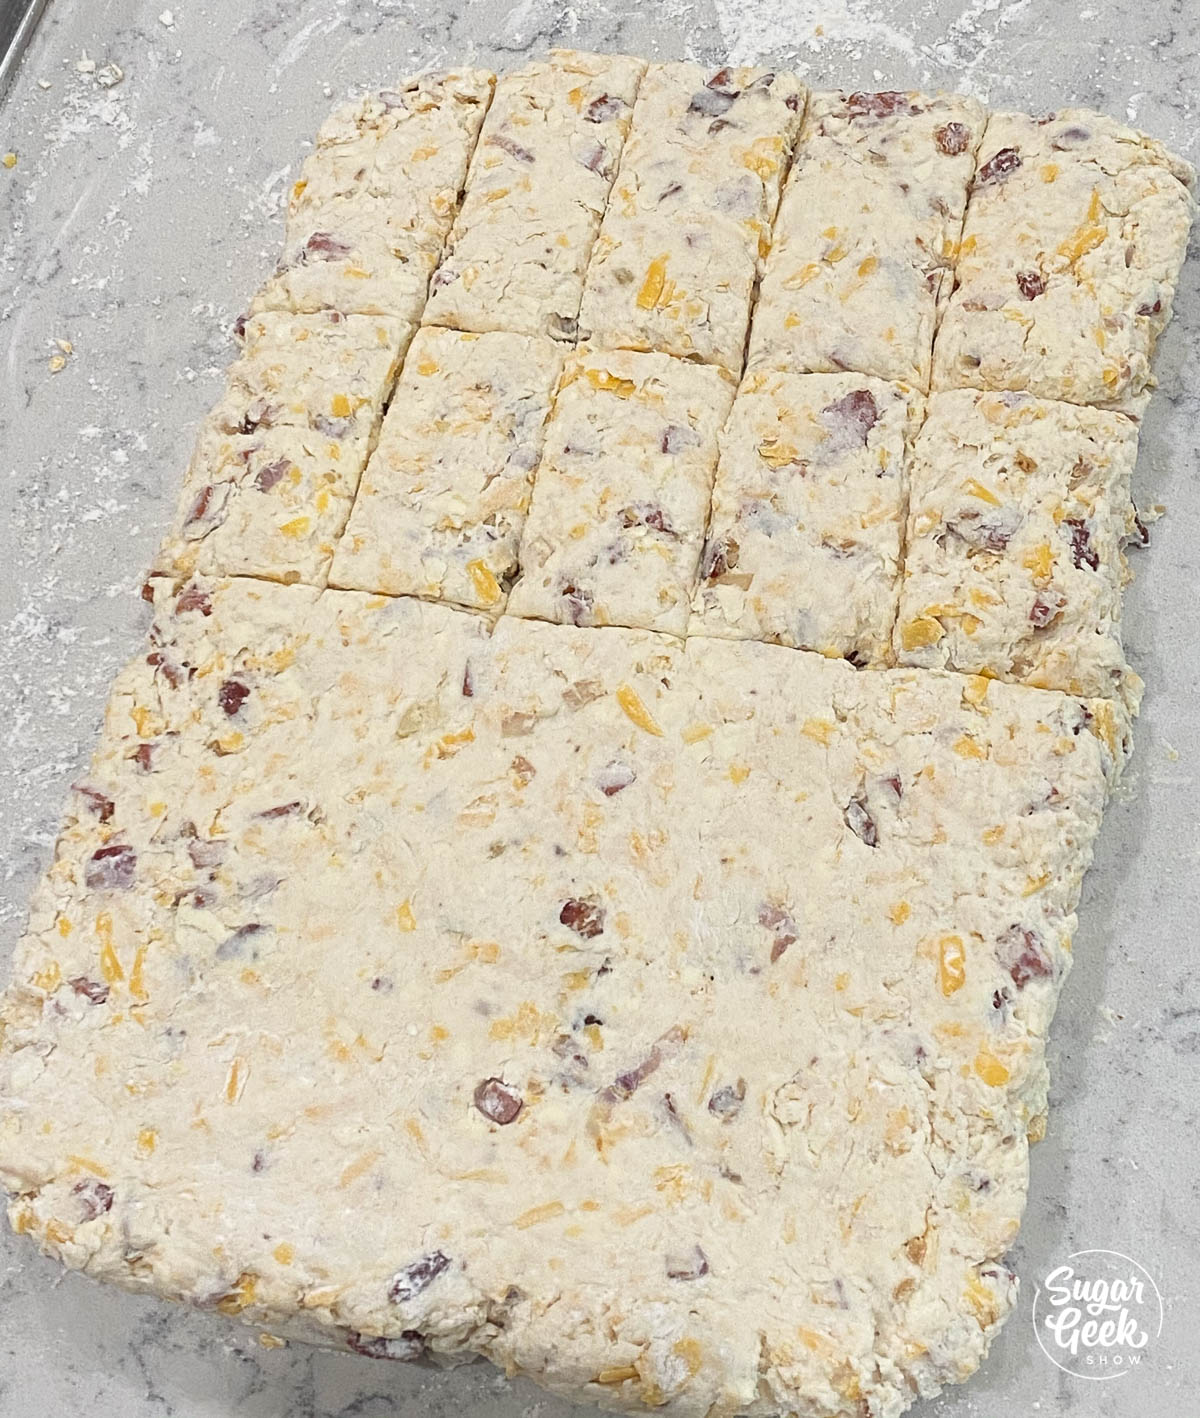 bacon cheddar scones cut into rectangles